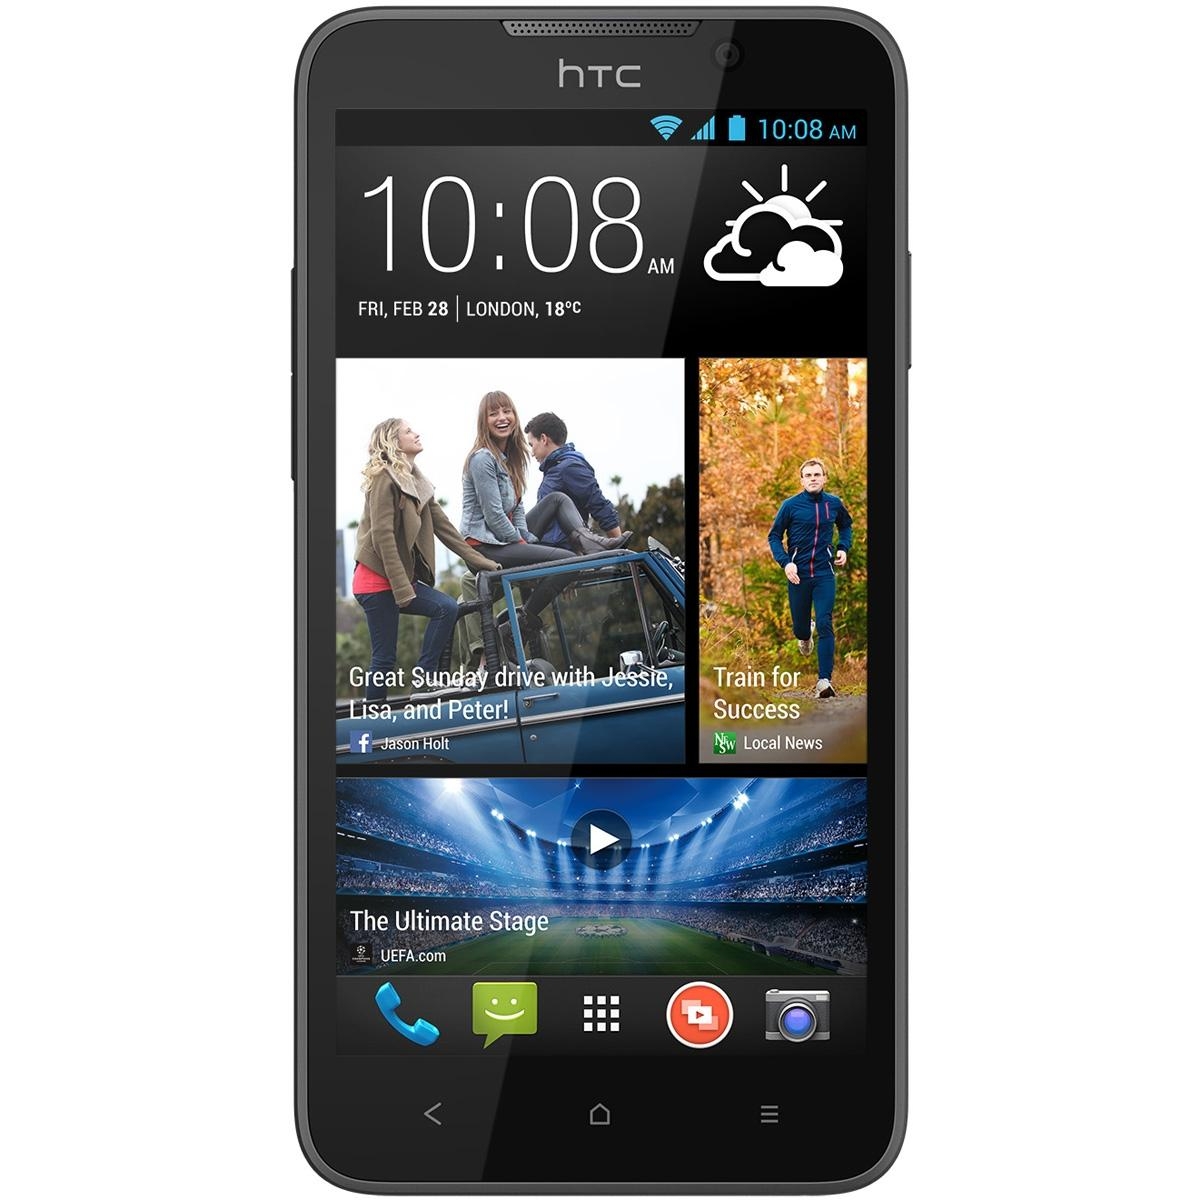 HTC Desire 516 Dual Sim (Dark Gray) - зображення 1